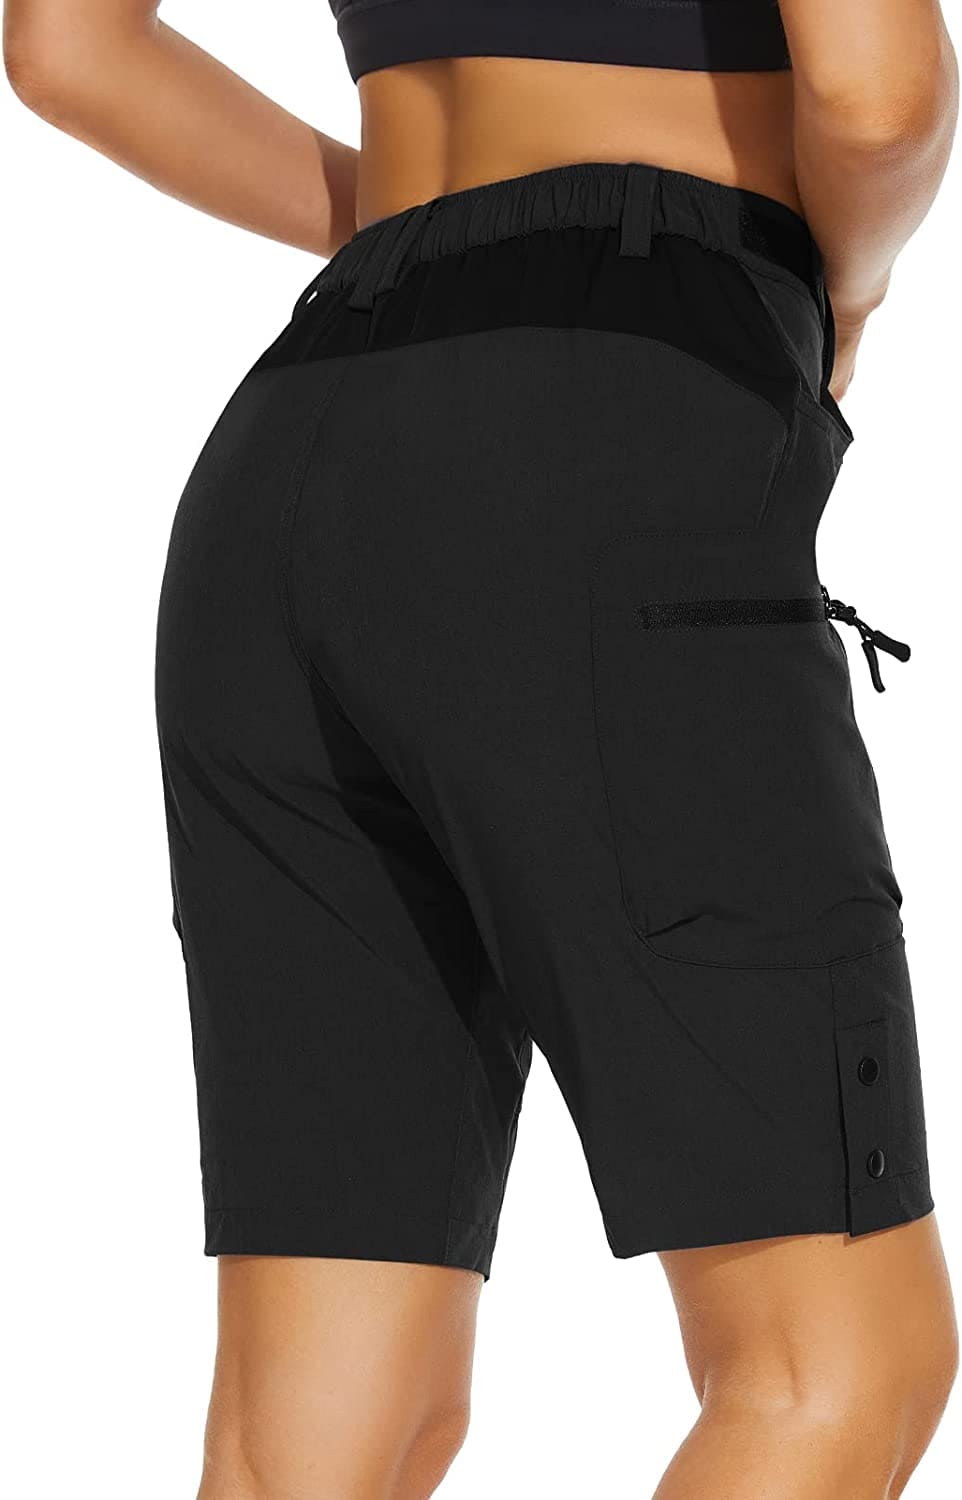 Moosehill Women's-Mountain-Bike-Shorts-MTB-Short, Cycling Padded Biking Shorts with Pocket